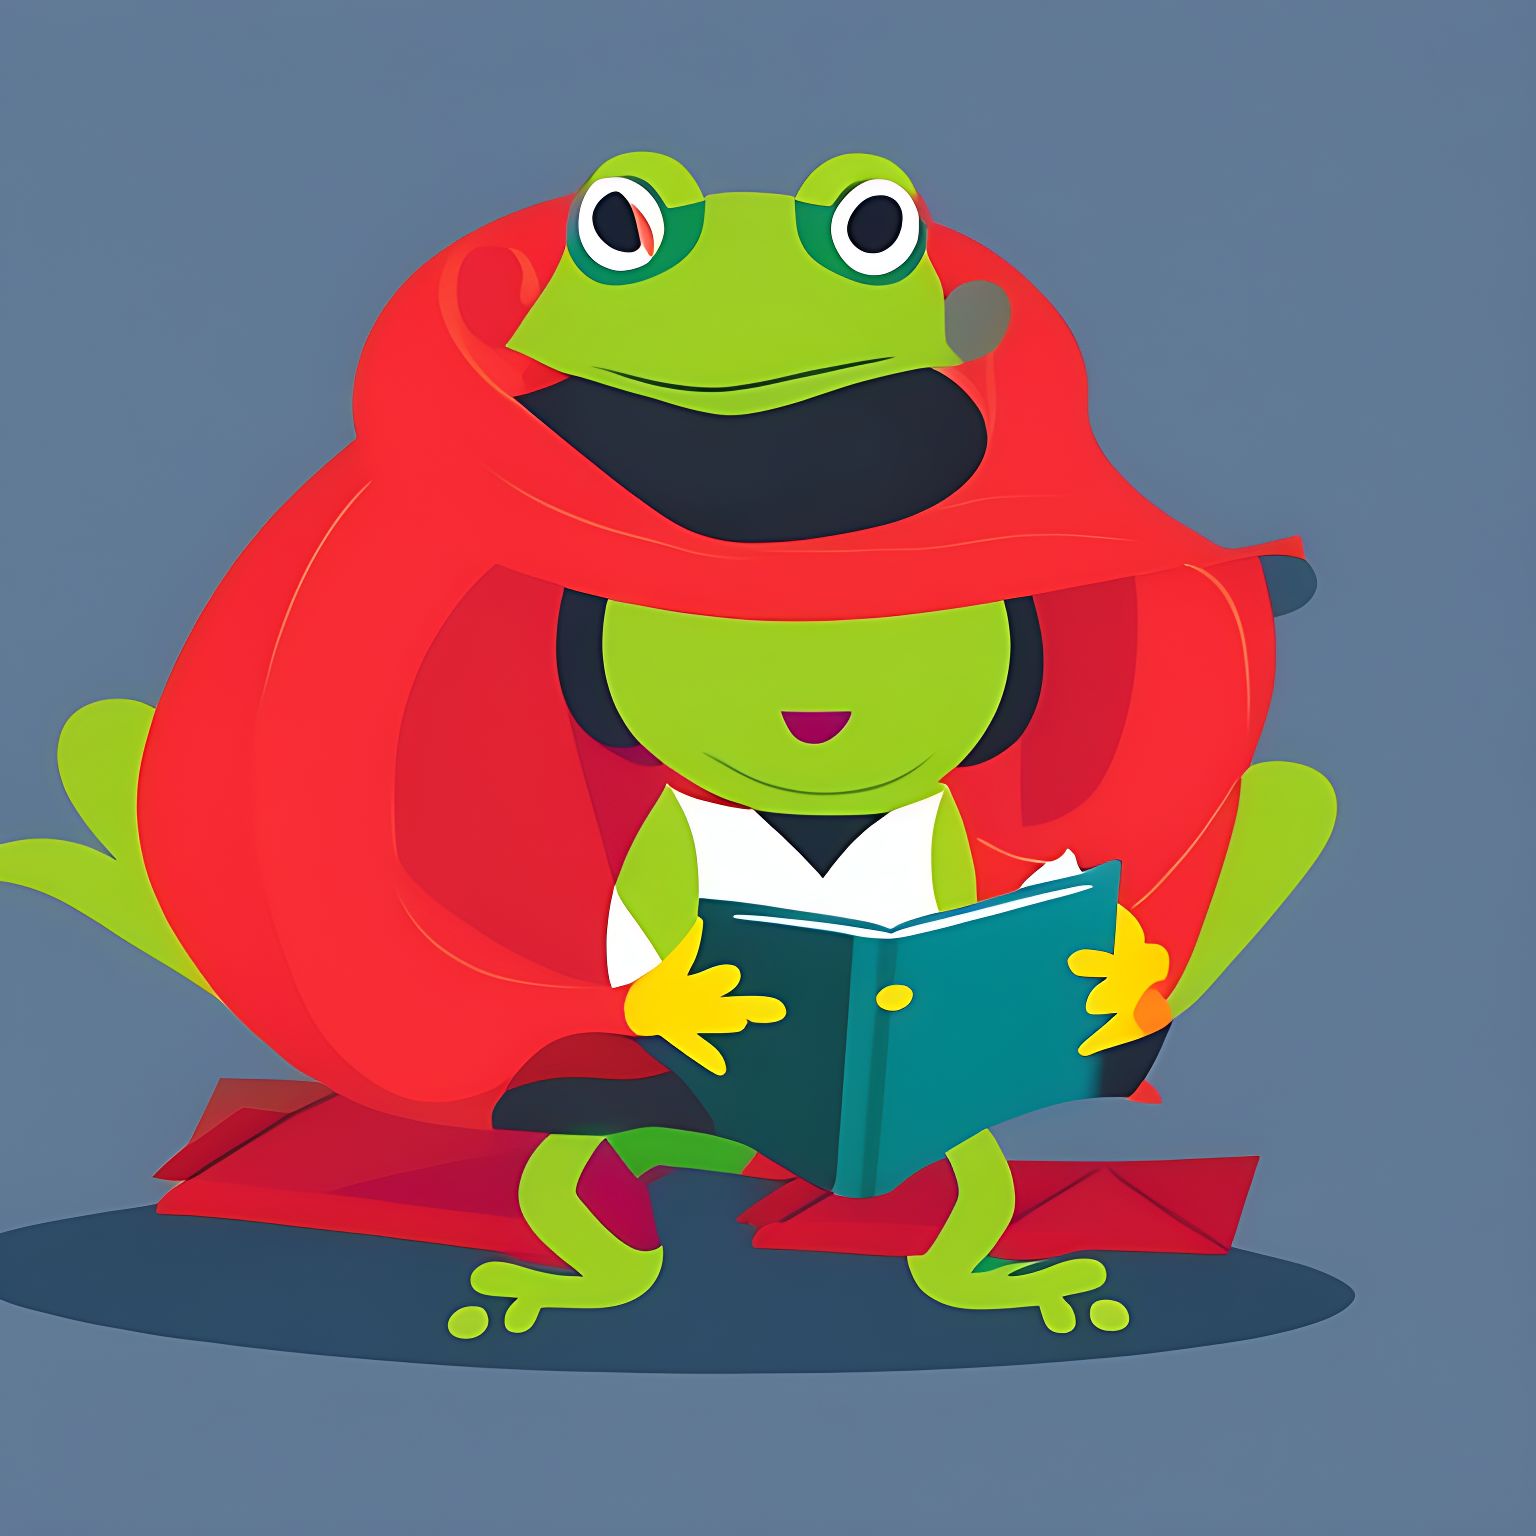 Vector illustration, Flat illustration, Illustration, a frog reading a book
, Trending on Artstation, Popular on Dribbble